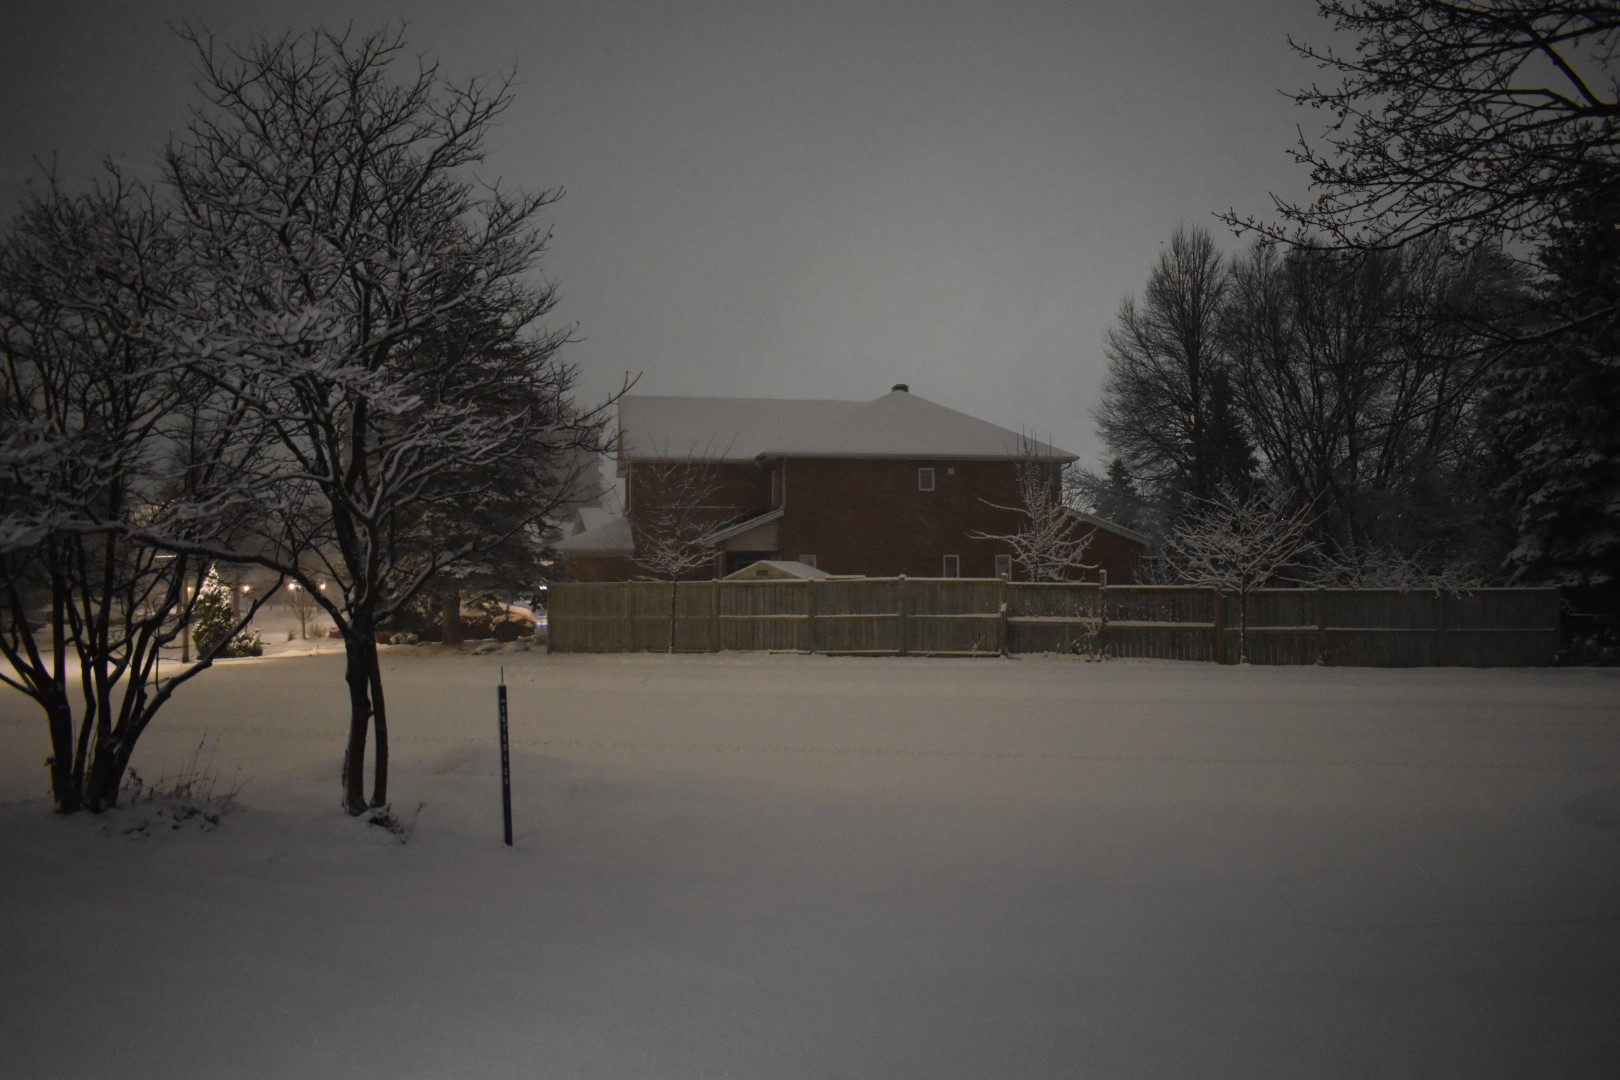 Snowstorm starting, night of December 16, Ottawa